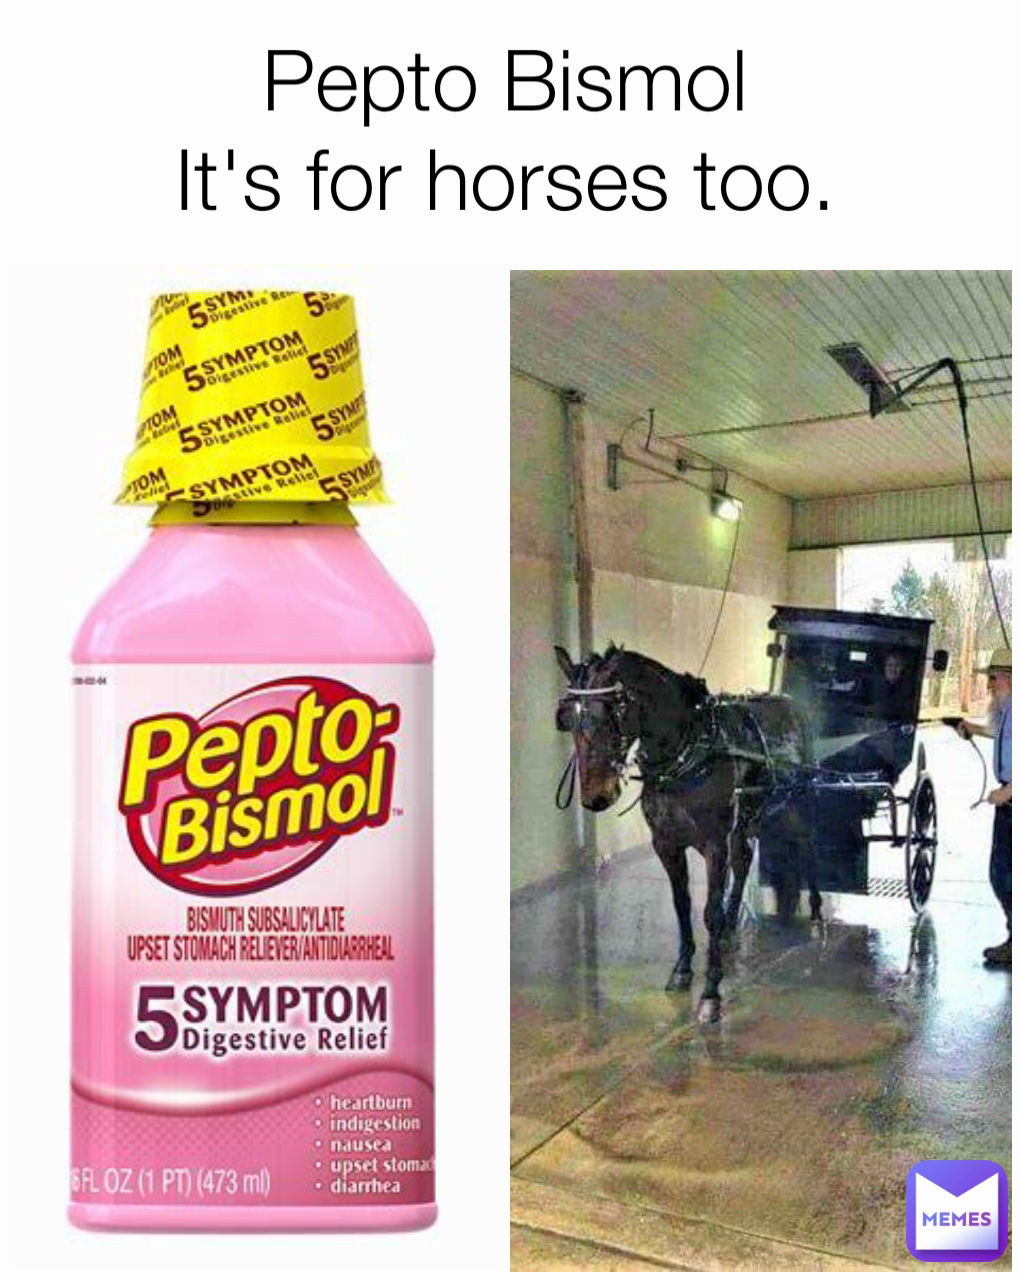 Pepto Bismol
It's for horses too.